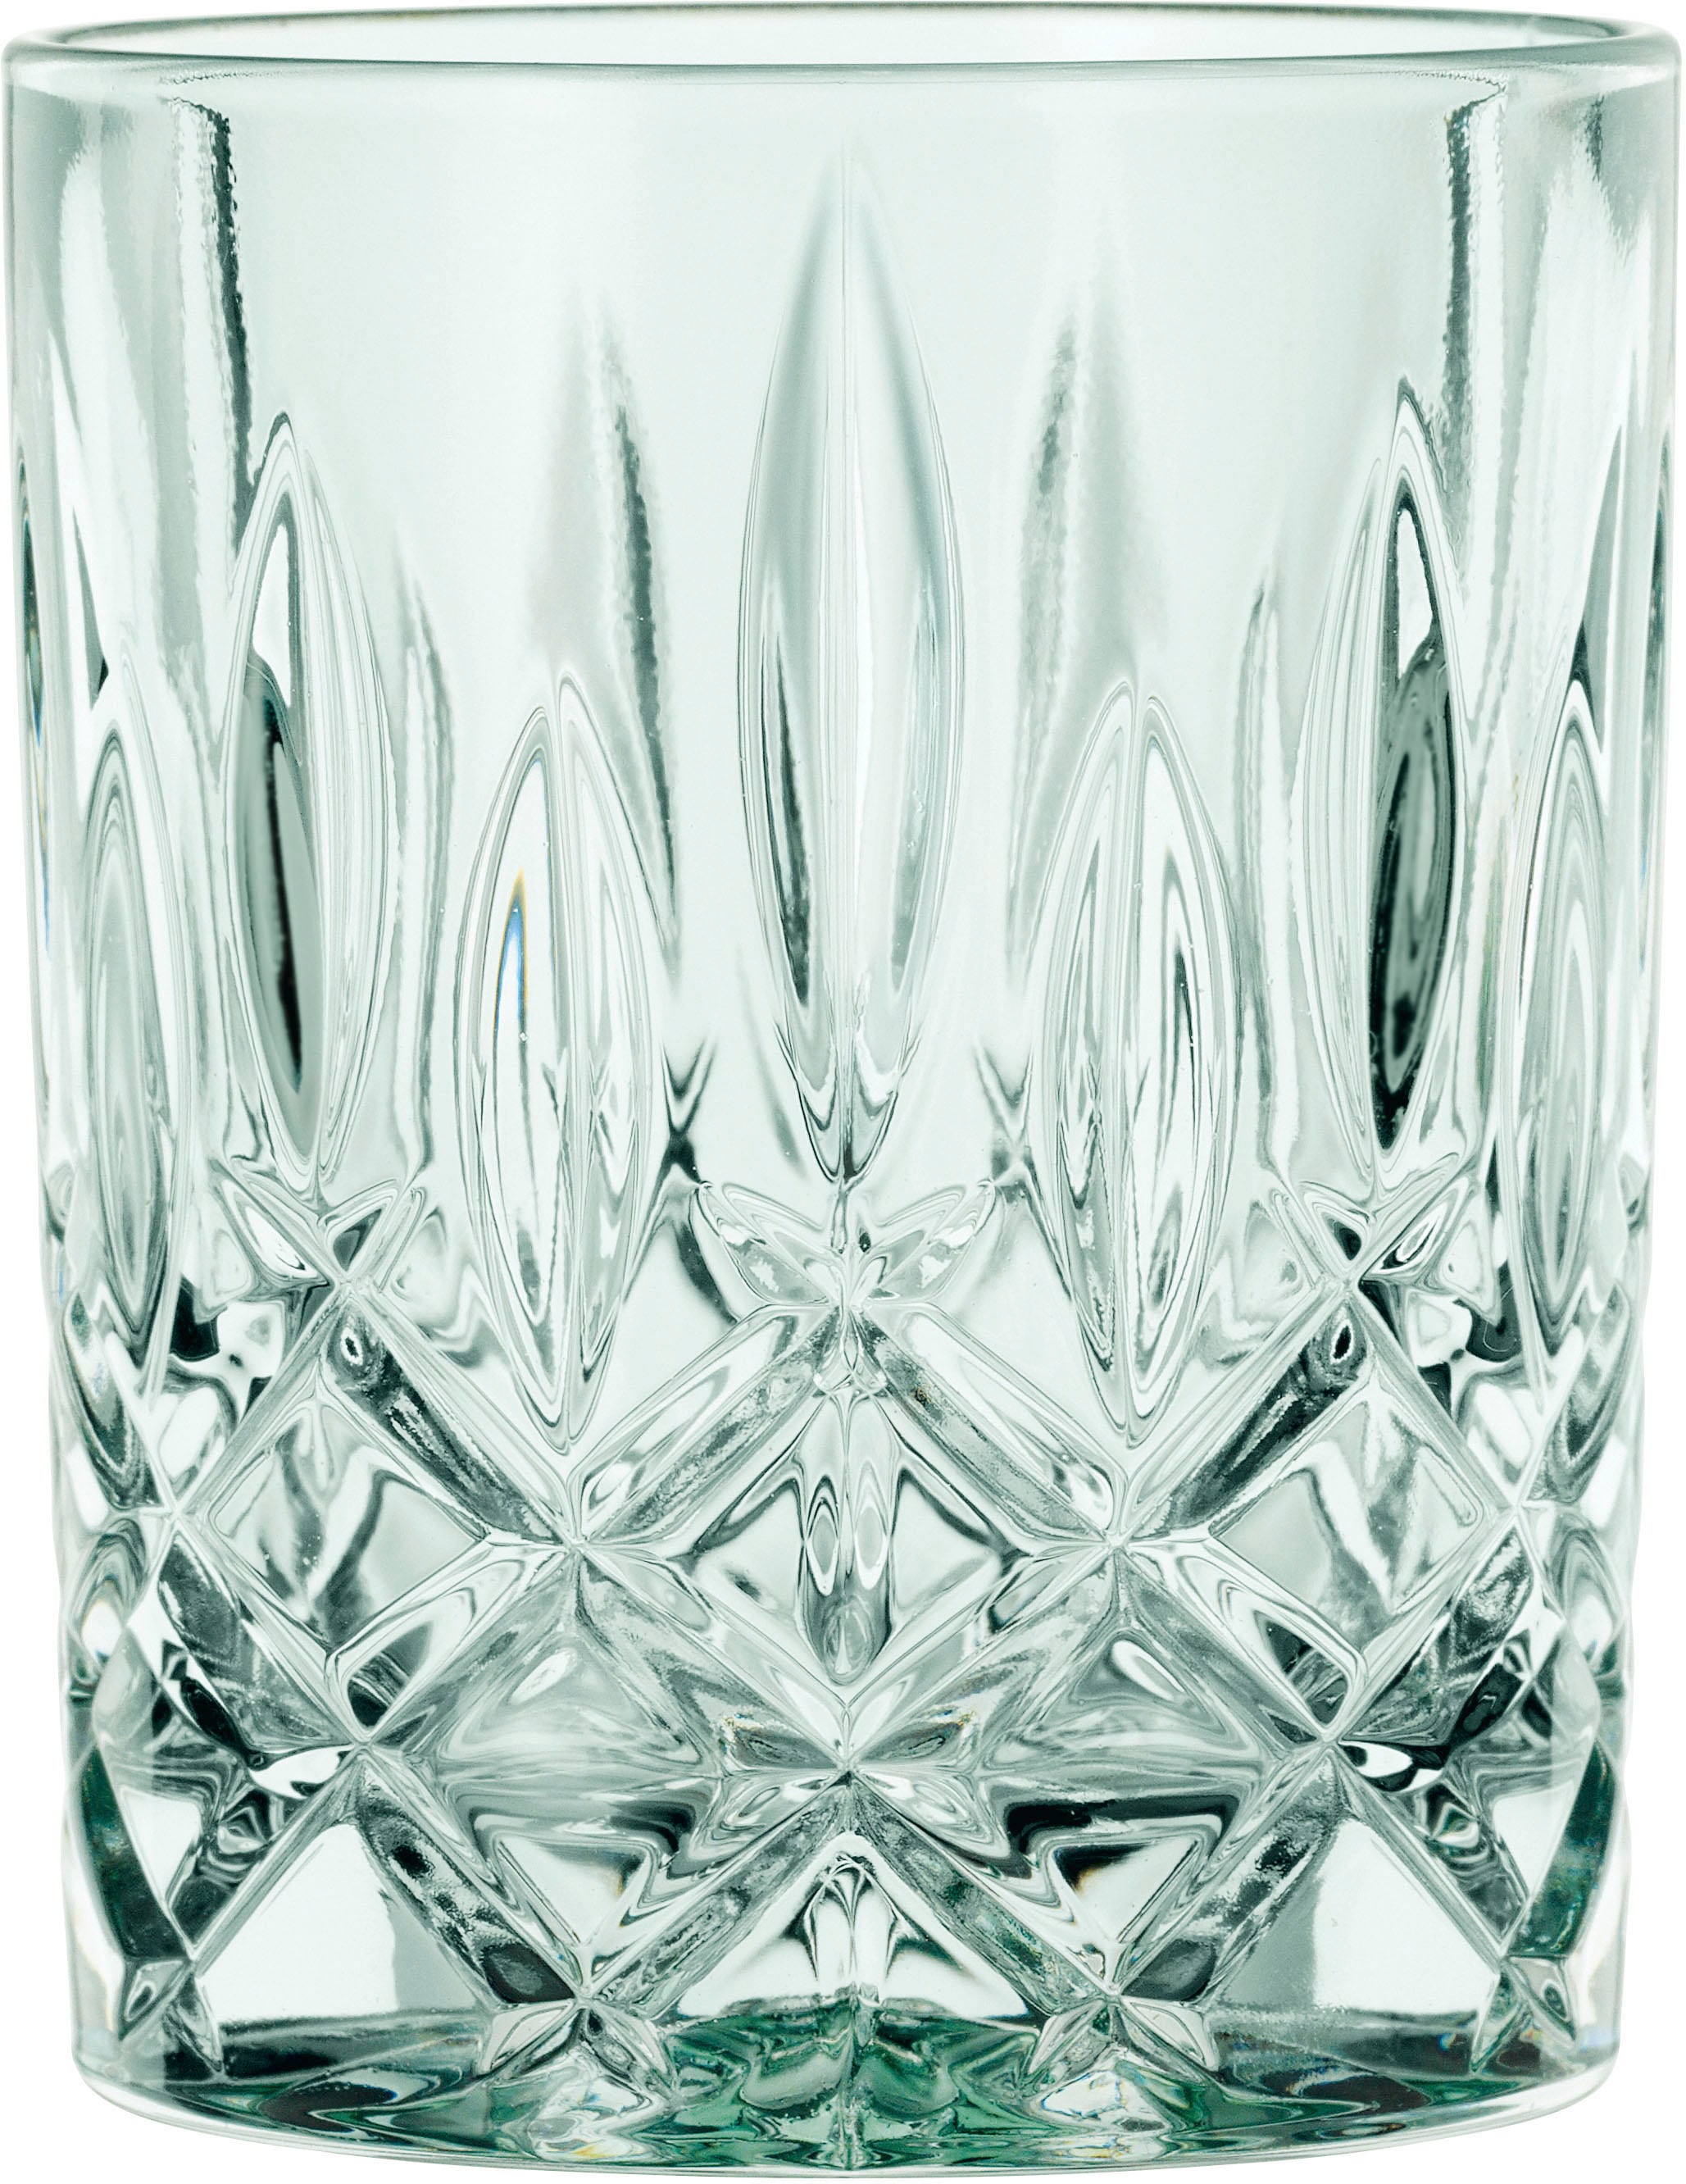 Whiskyglas »Noblesse«, (Set, 2 tlg.), Made in Germany, 295 ml, 2-teilig